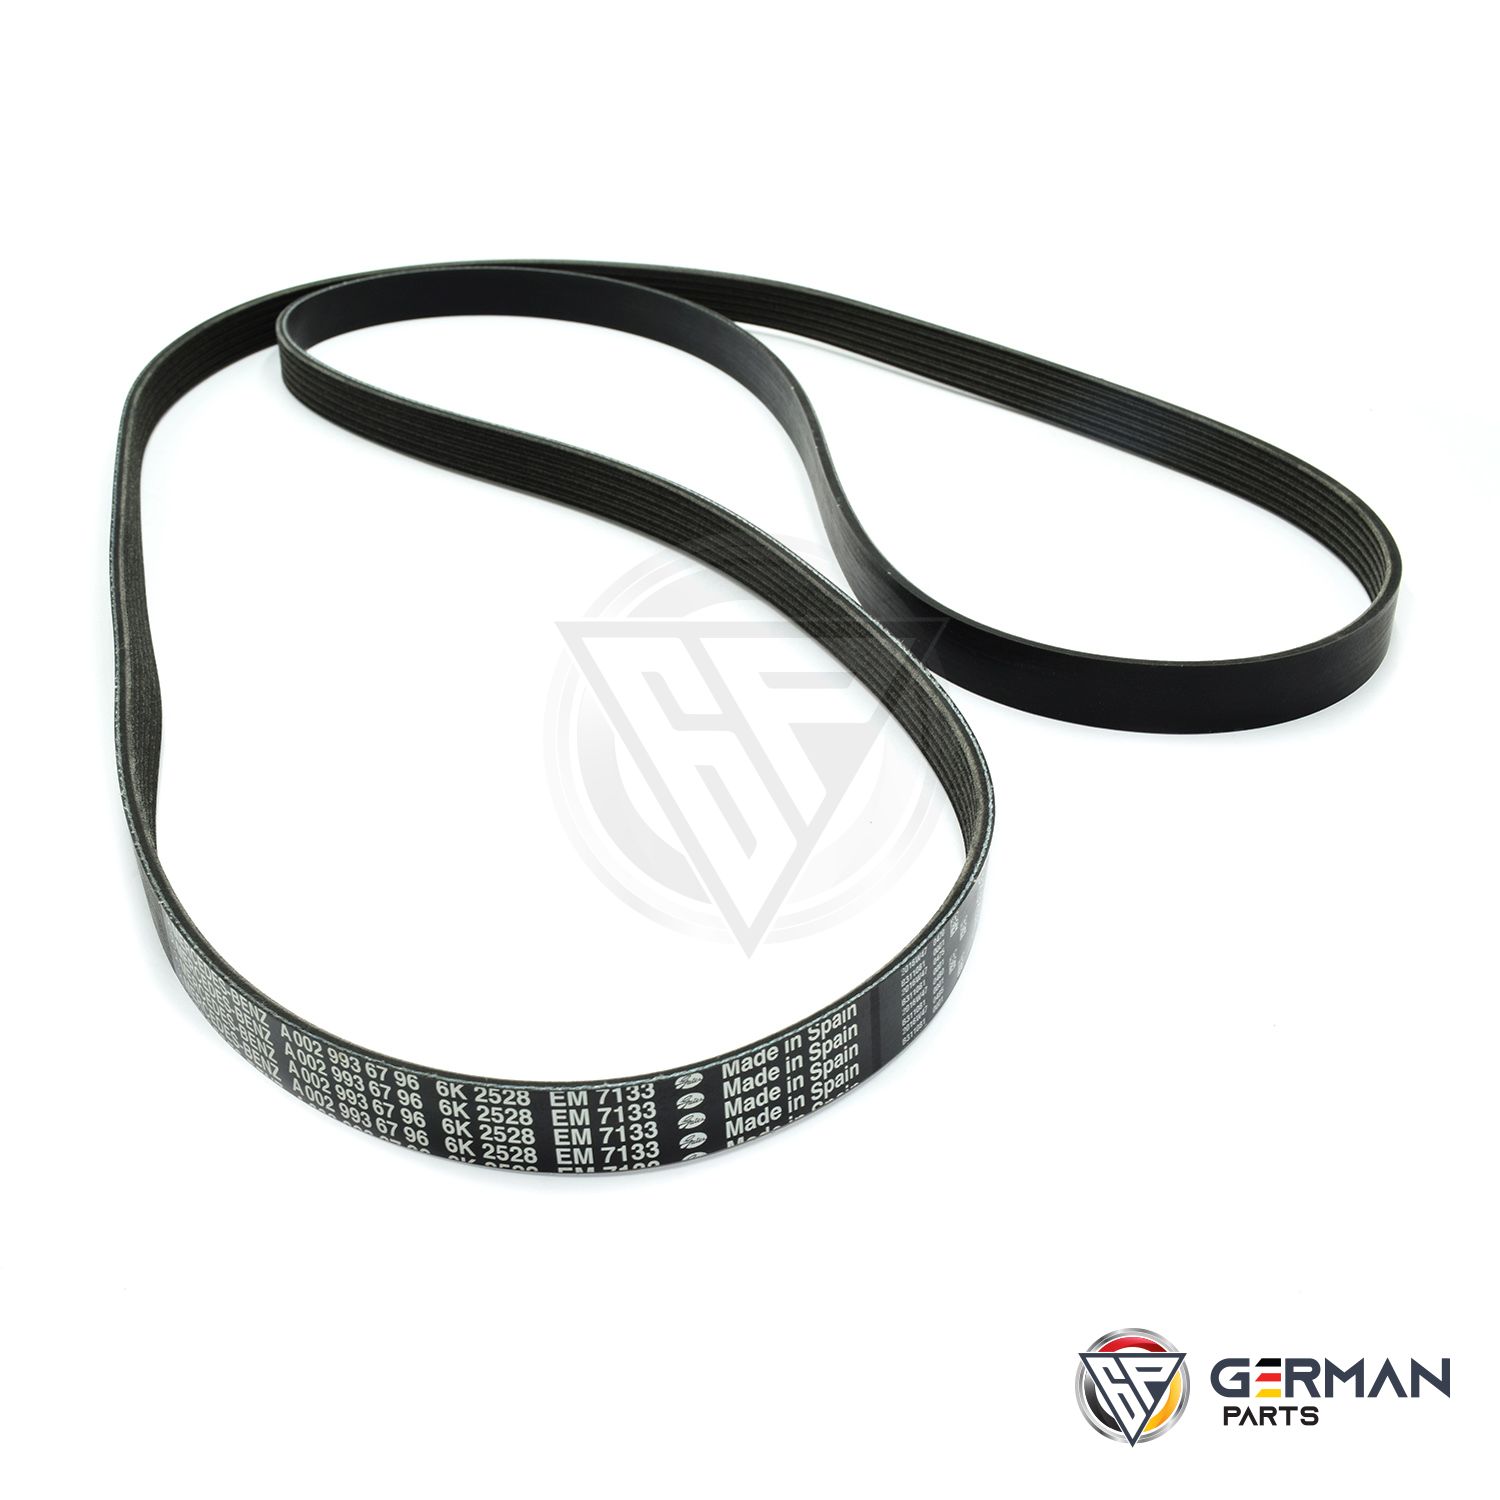 Buy Mercedes Benz V Belt 0029936796 - German Parts